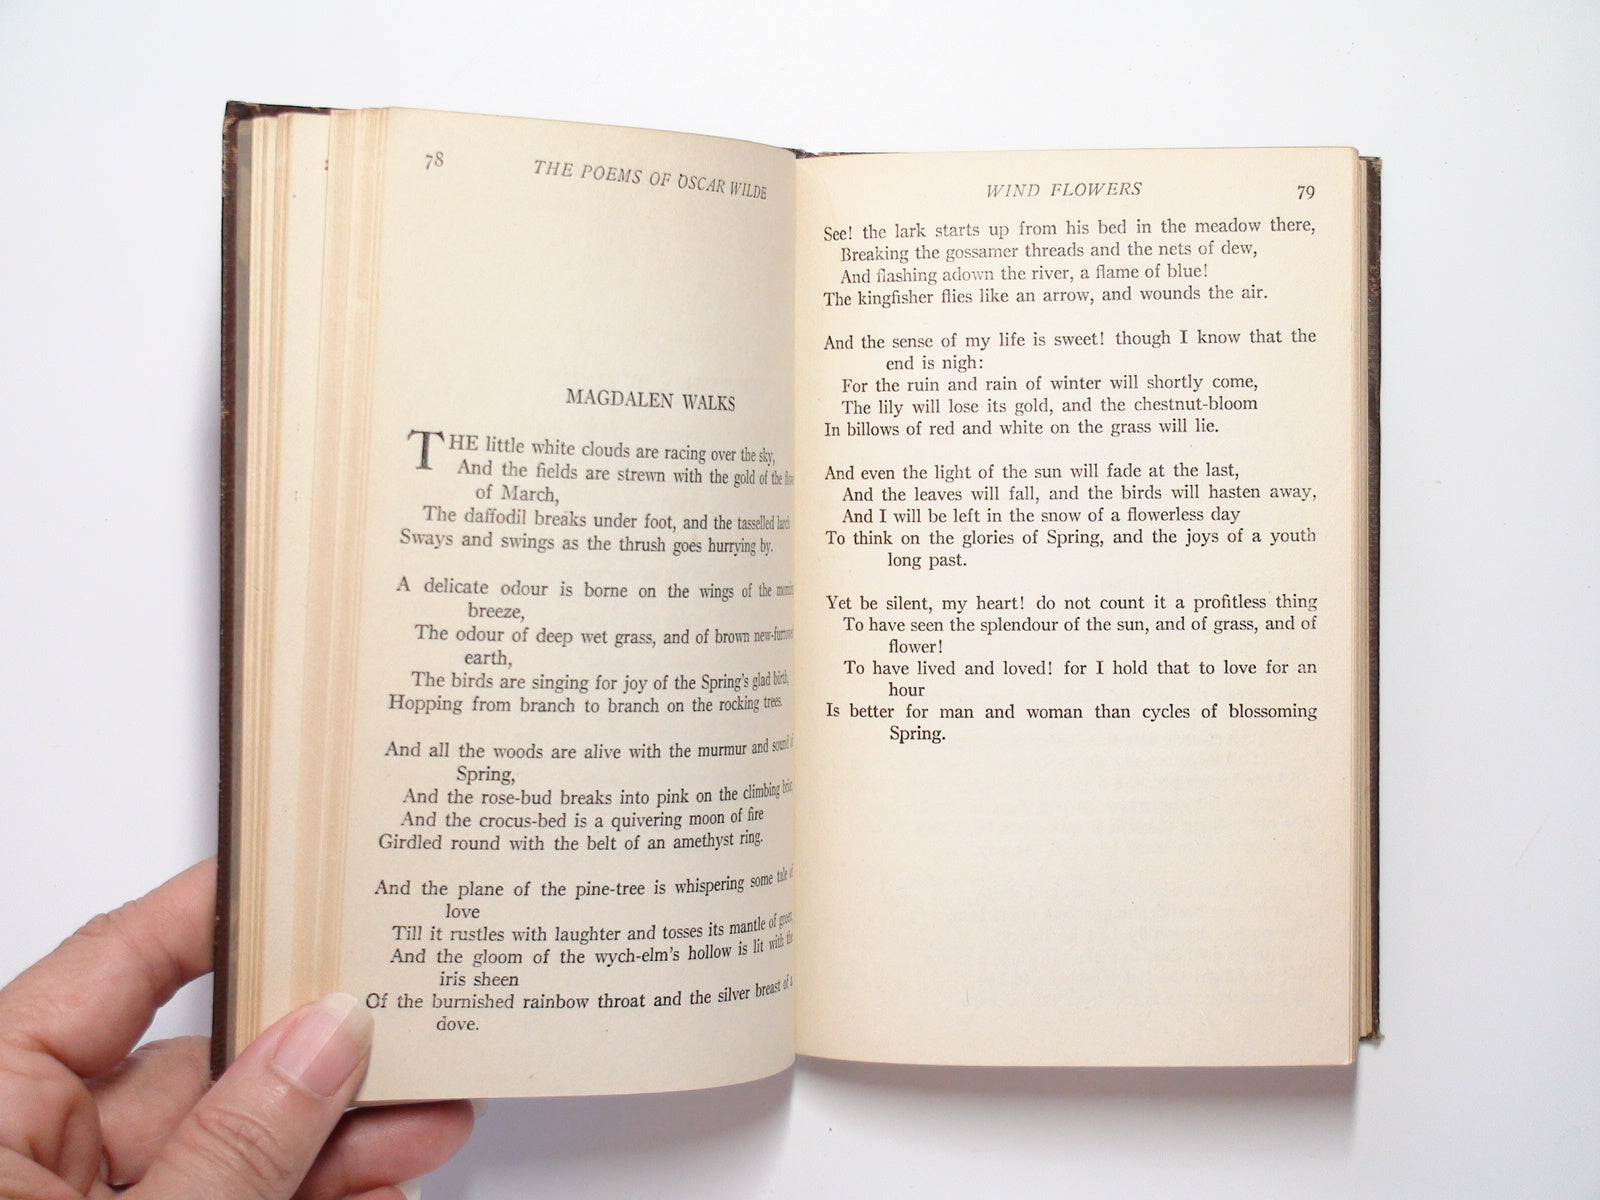 Poems, Oscar Wilde, The Modern Library, Boni & Liveright, Flexible Cloth, c1920s